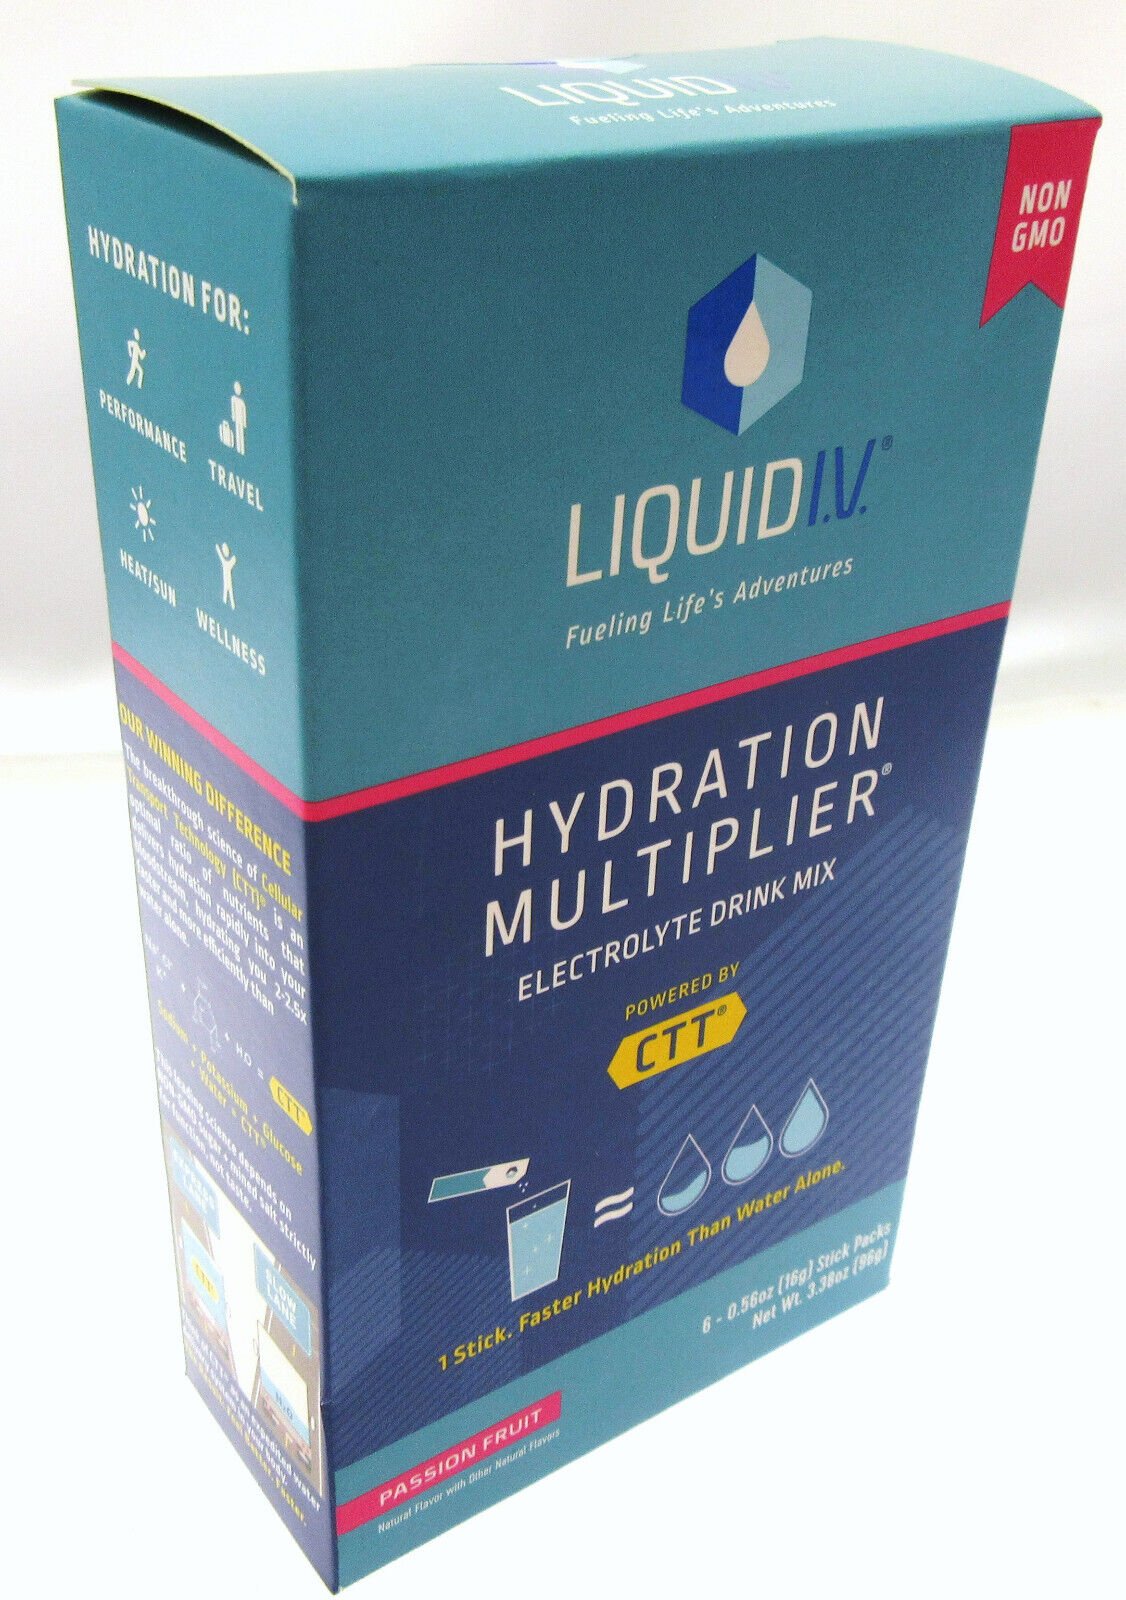 Liquid I.V. ~ Hydration Multiplier ~ Stick Packs ~ Passion Fruit ~ Drink Mix